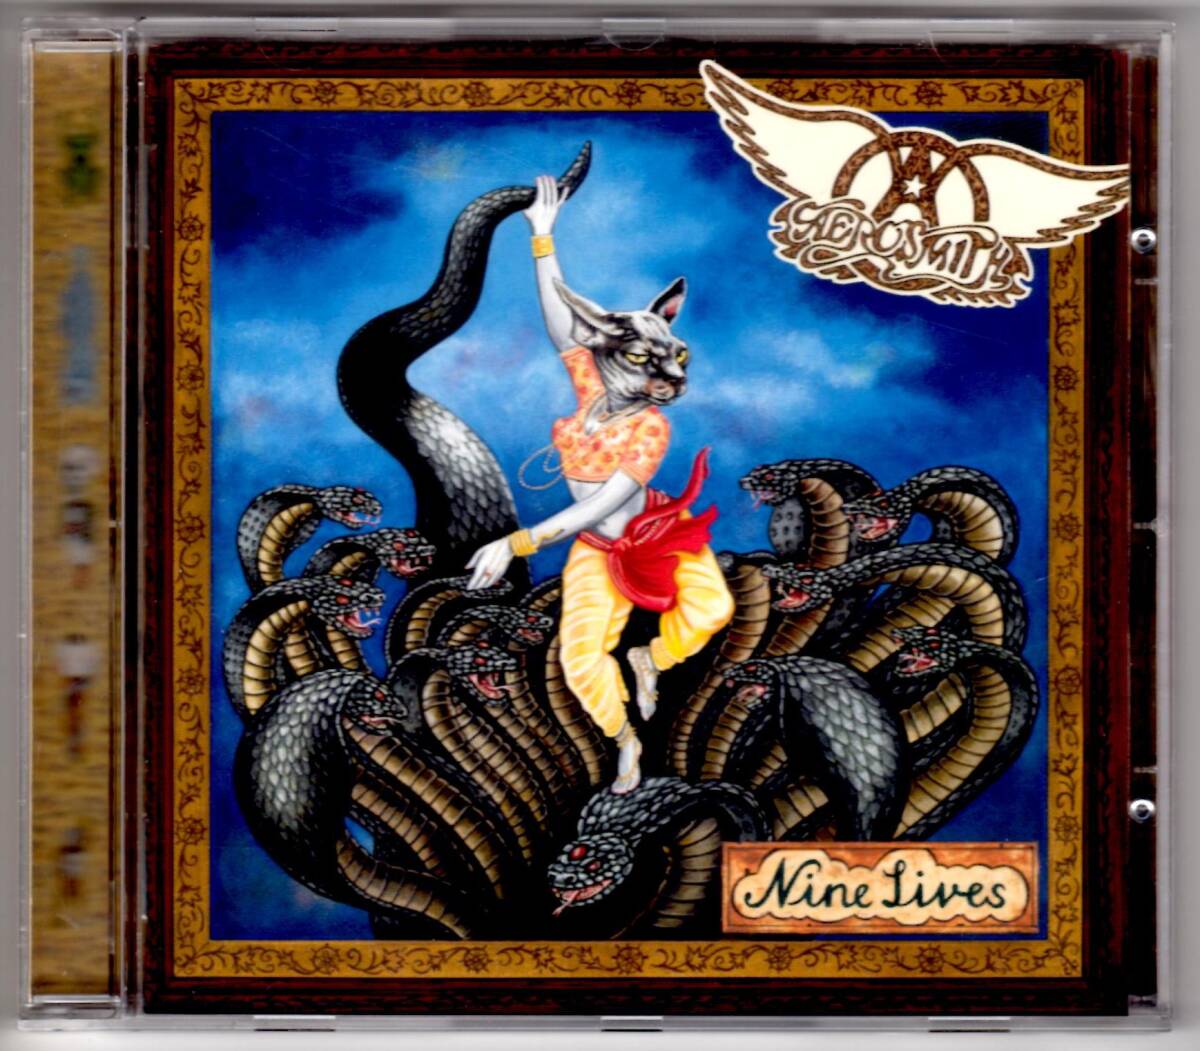 Used CD 輸入盤 エアロスミス Aerosmith『ナイン・ライヴズ』- Nine Lives(1997年) 全14曲EUR盤